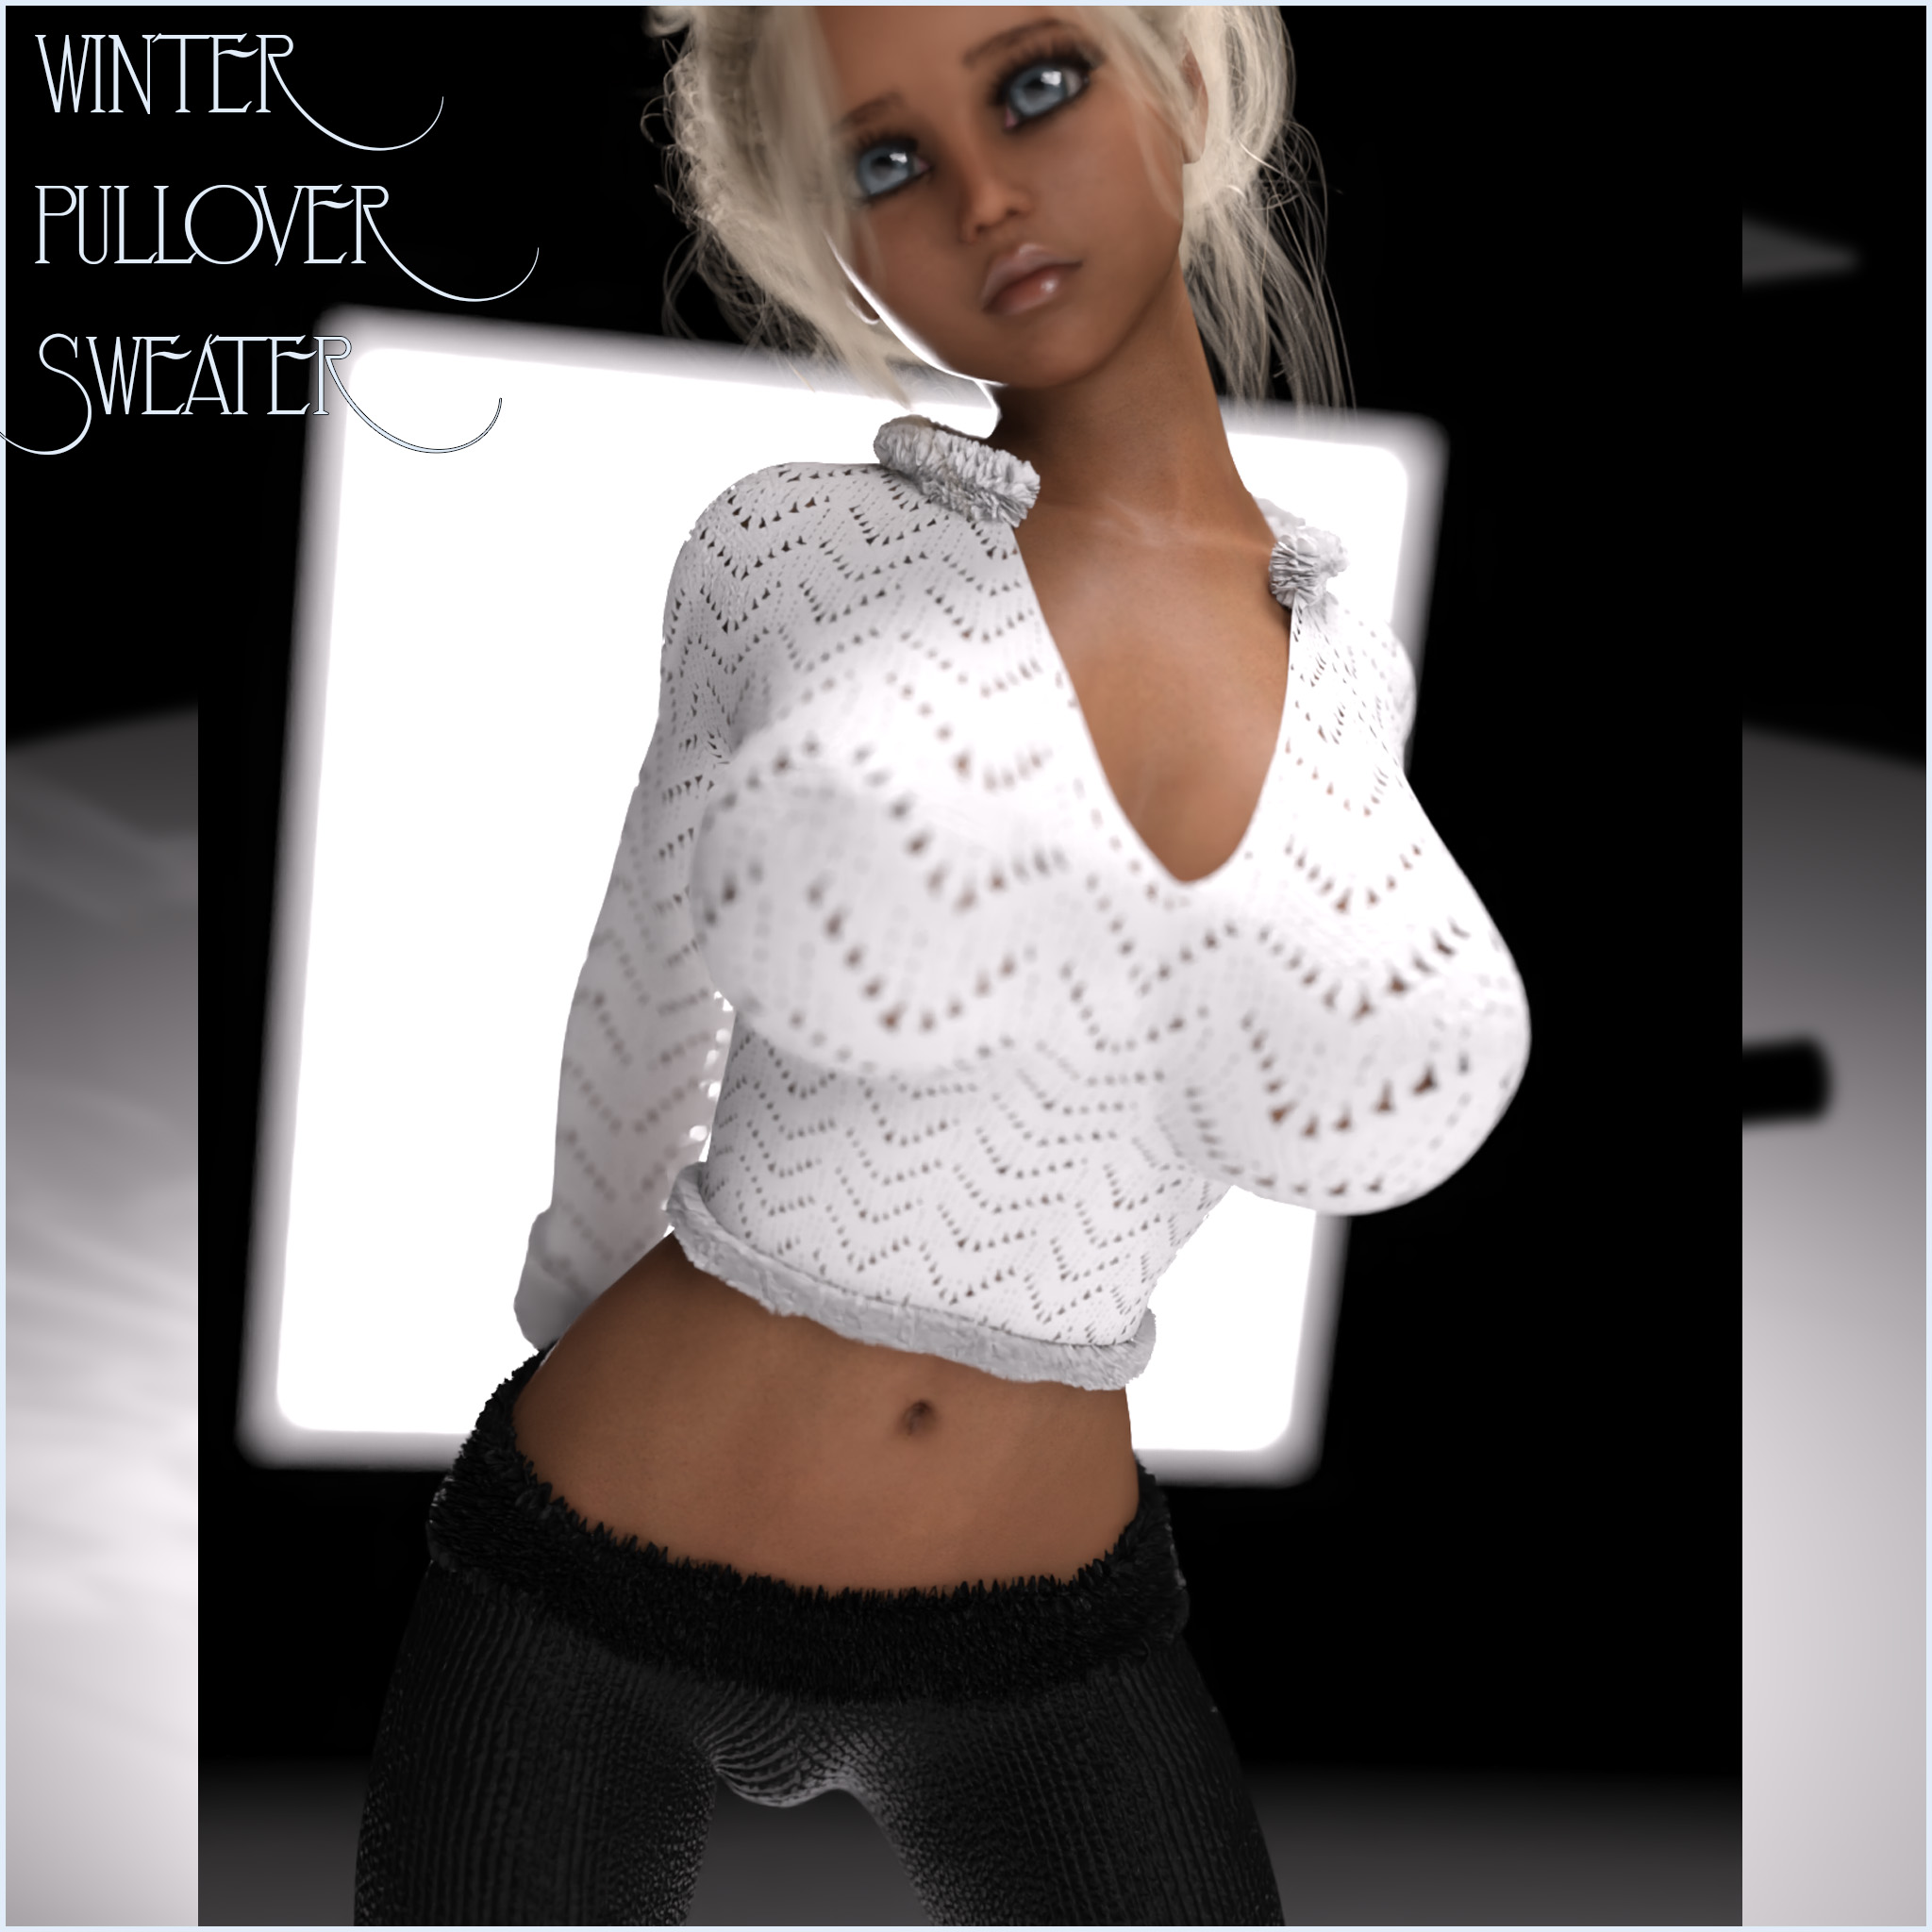 Winter Pullover Sweater For Daz Studio Genesis 8 Female